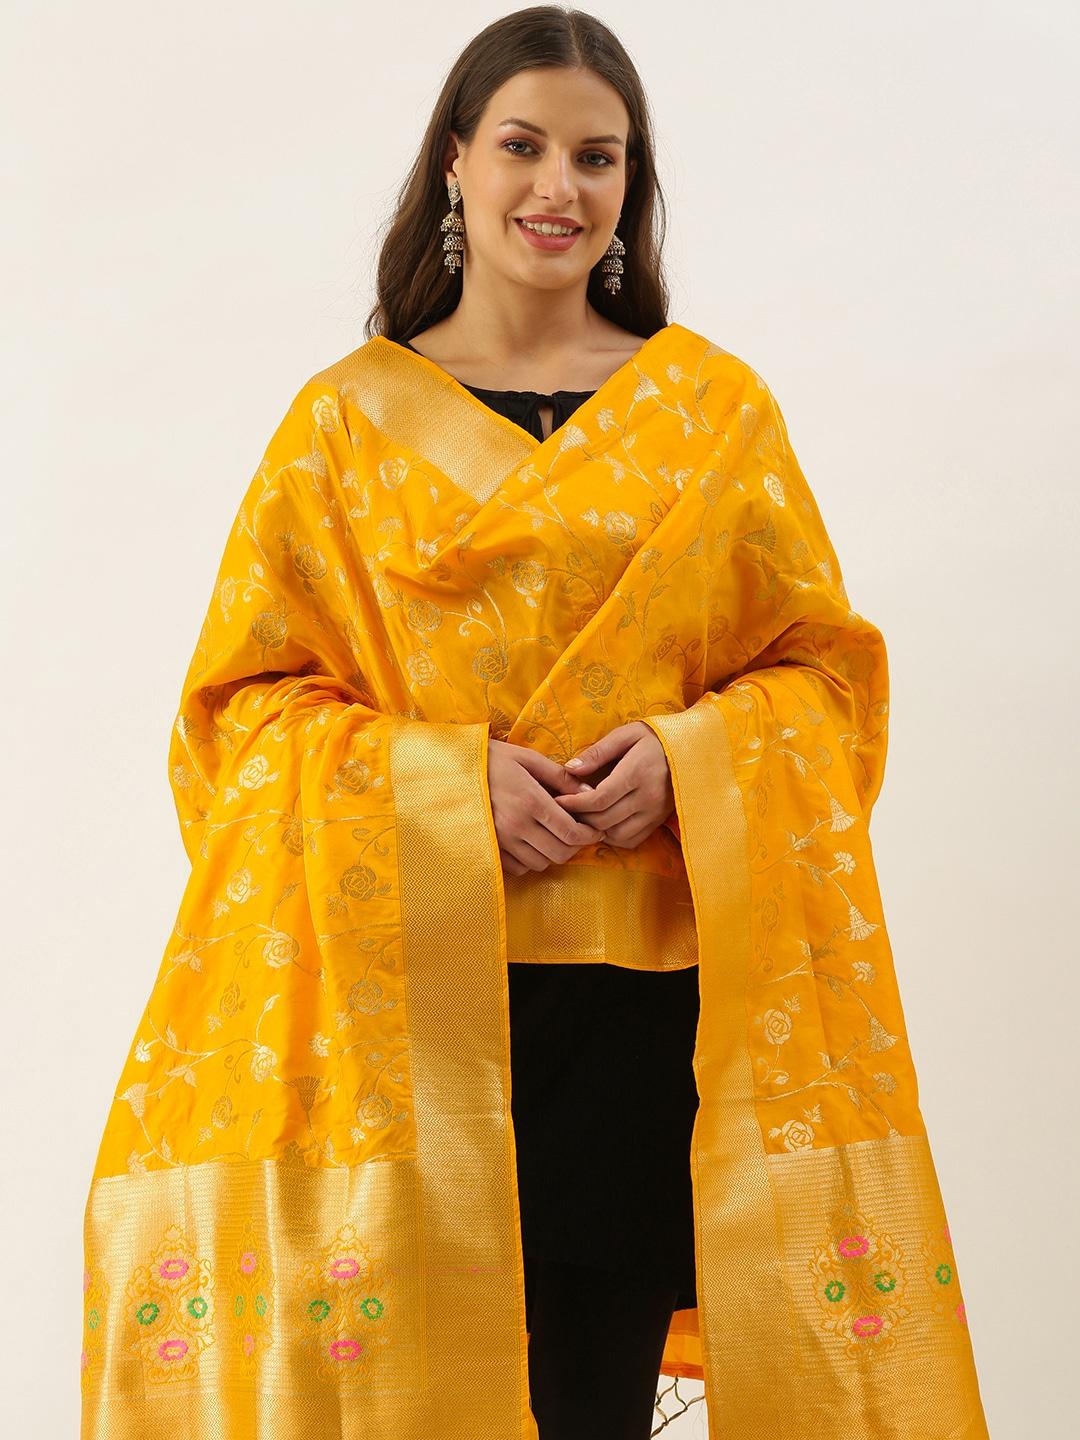 SANGAM PRINTS Mustard & Golden Ethnic Motifs Woven Design Dupatta with Tassel Detail